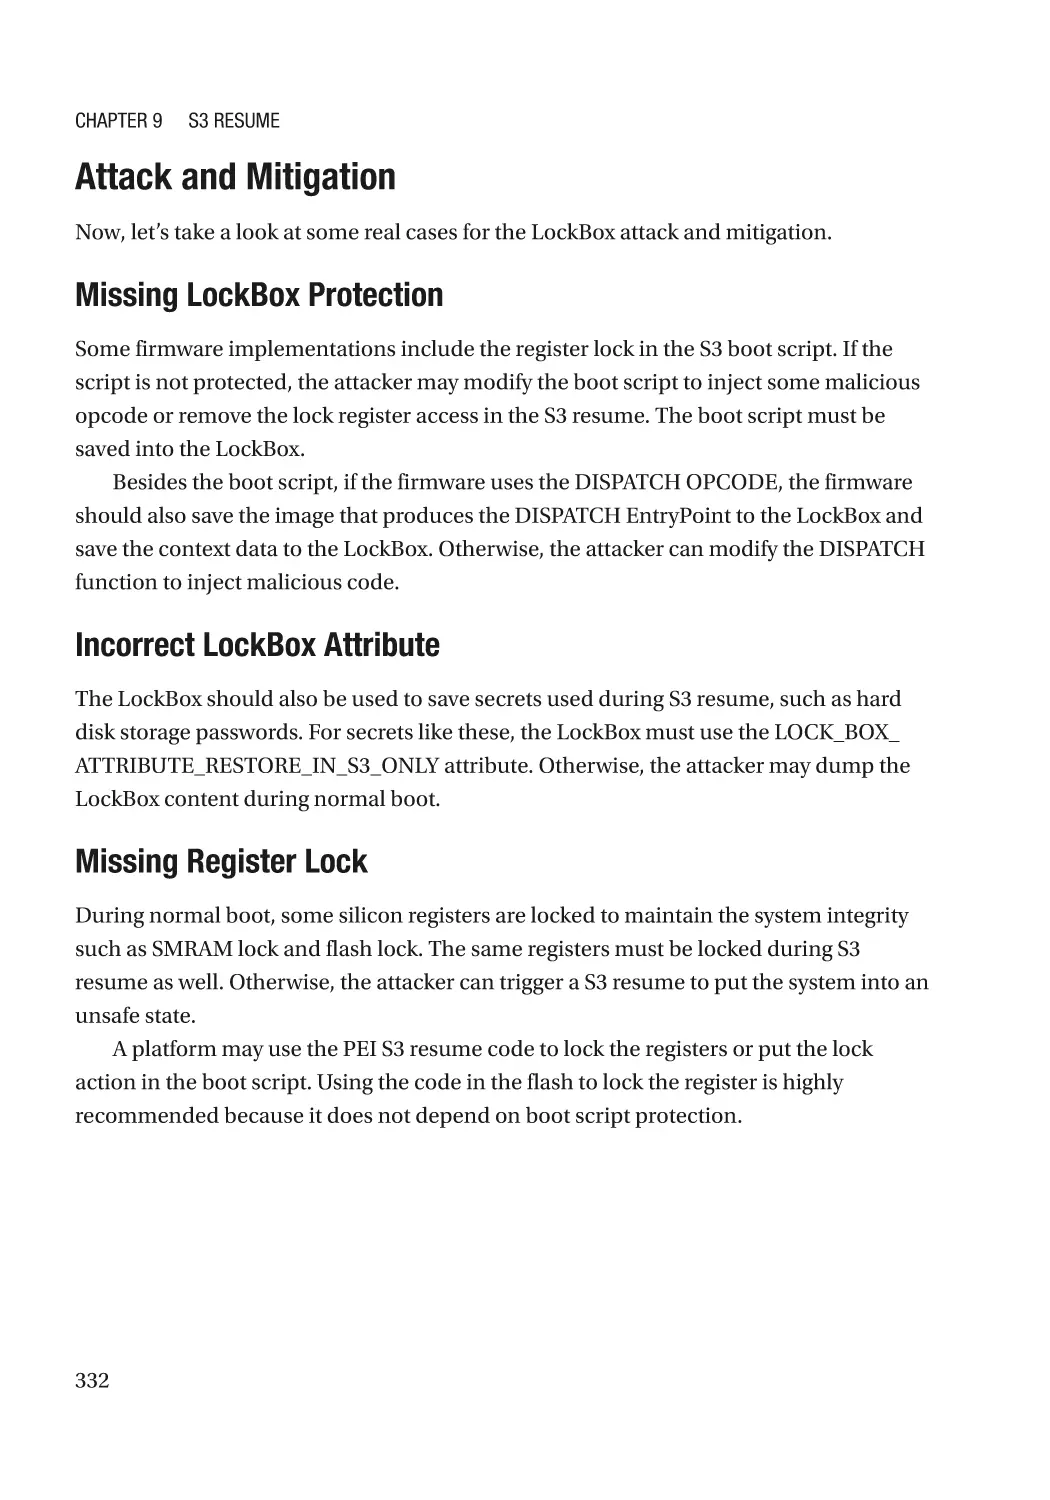 Attack and Mitigation
Missing LockBox Protection
Incorrect LockBox Attribute
Missing Register Lock